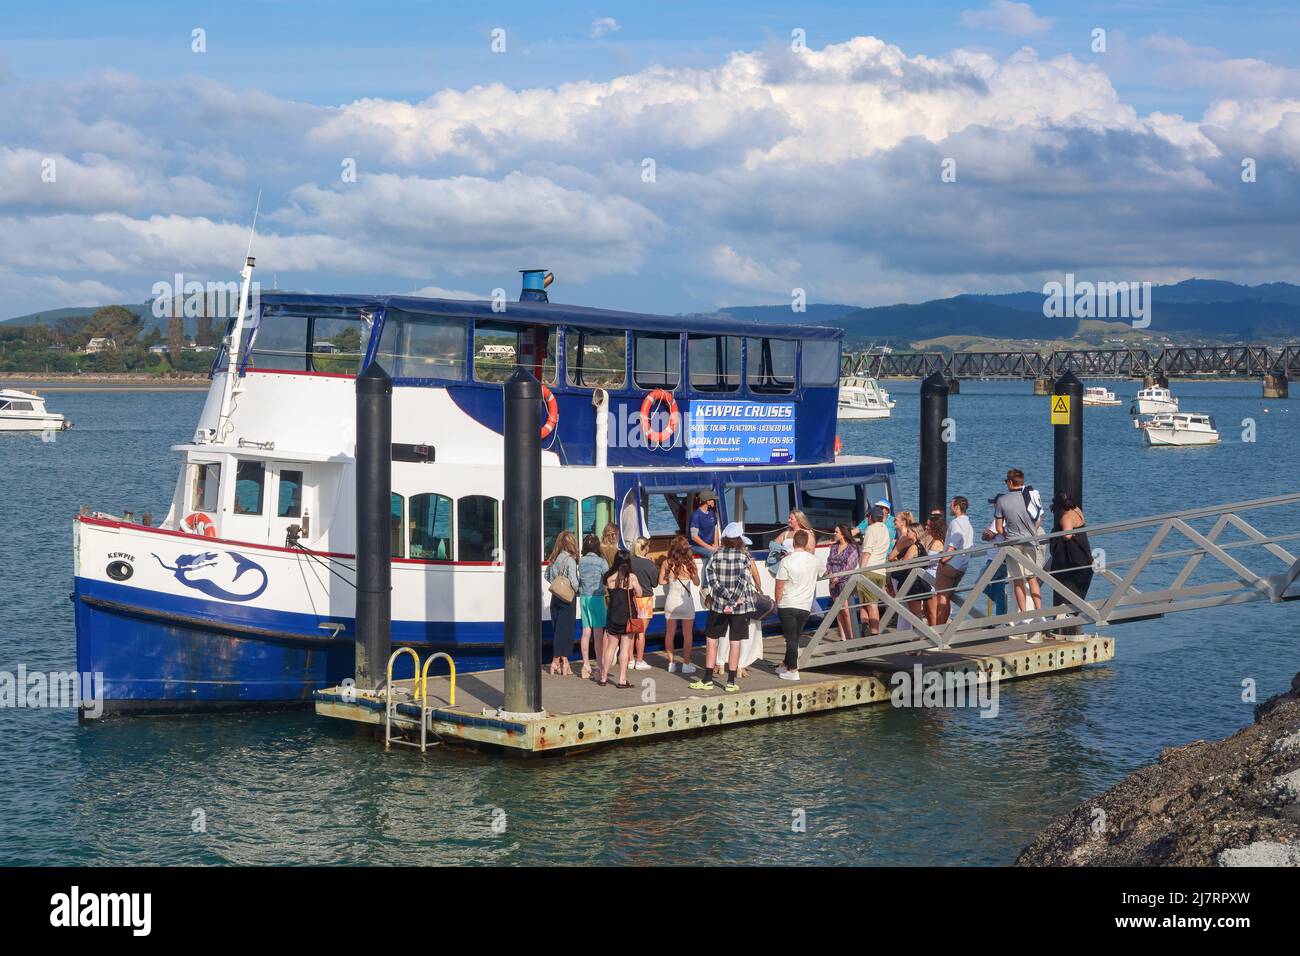 A small tour boat, the 'Kewpie', taking on passengers in Tauranga Harbour, Tauranga, New Zealand Stock Photo